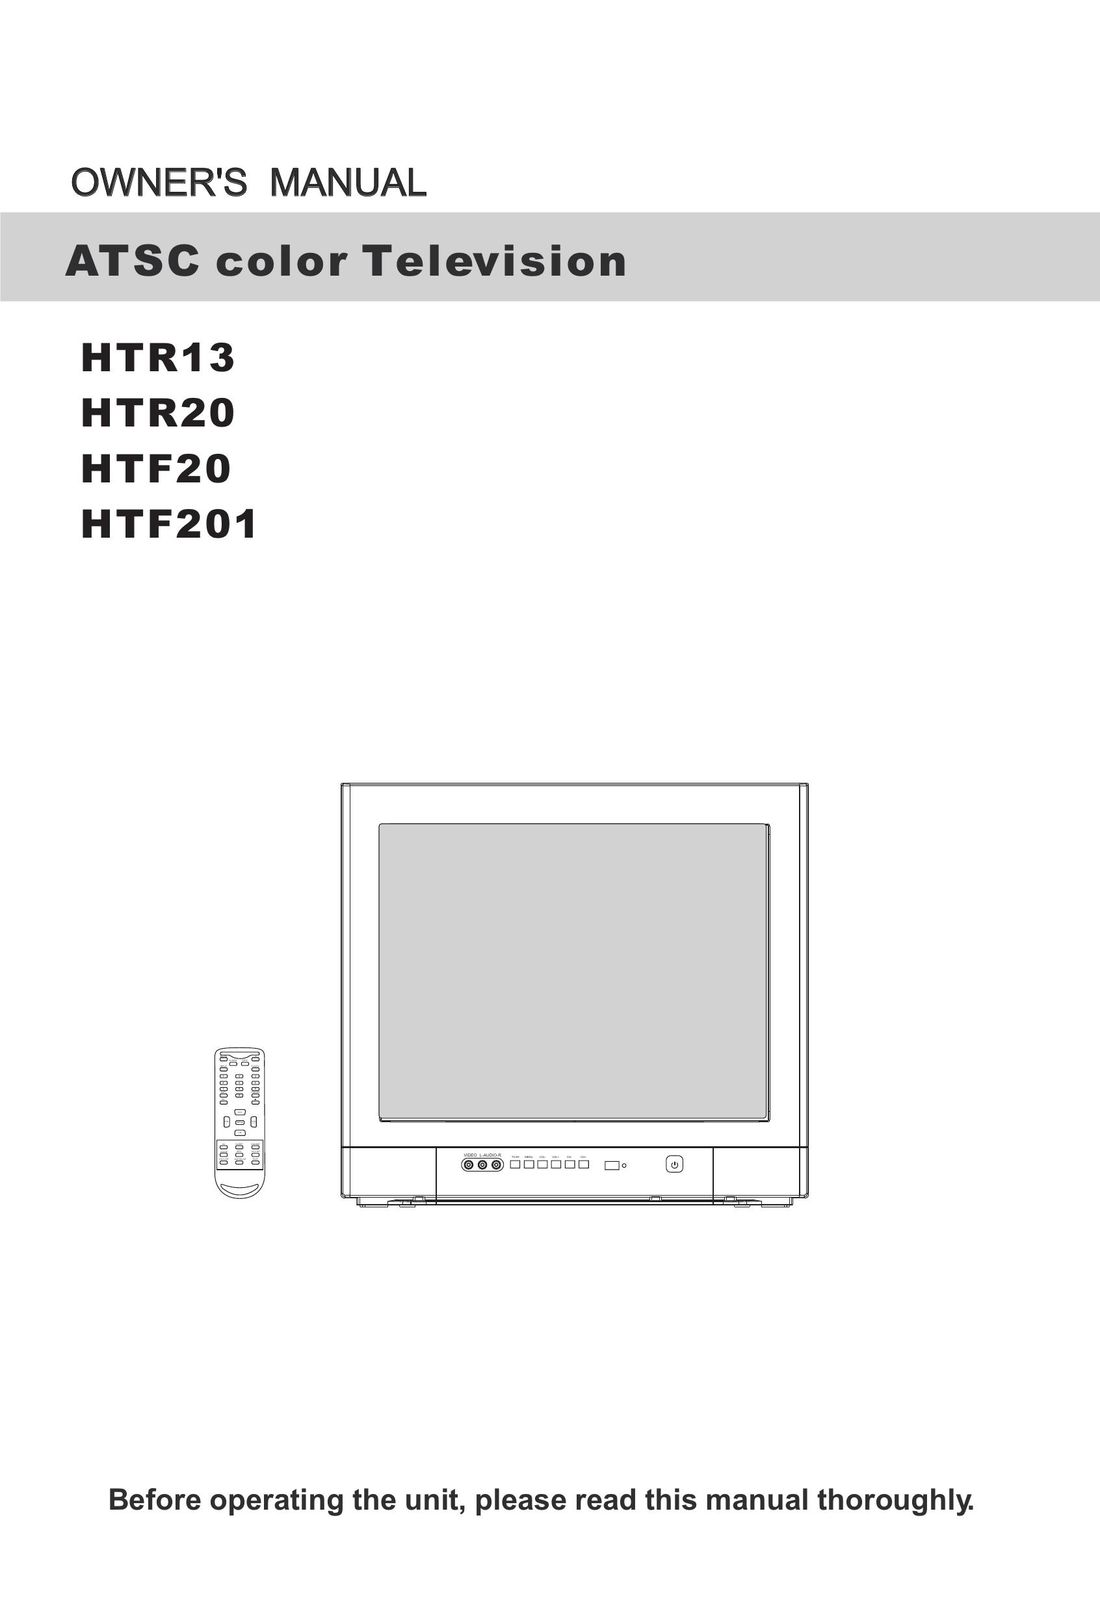 Haier HTF201 CRT Television User Manual